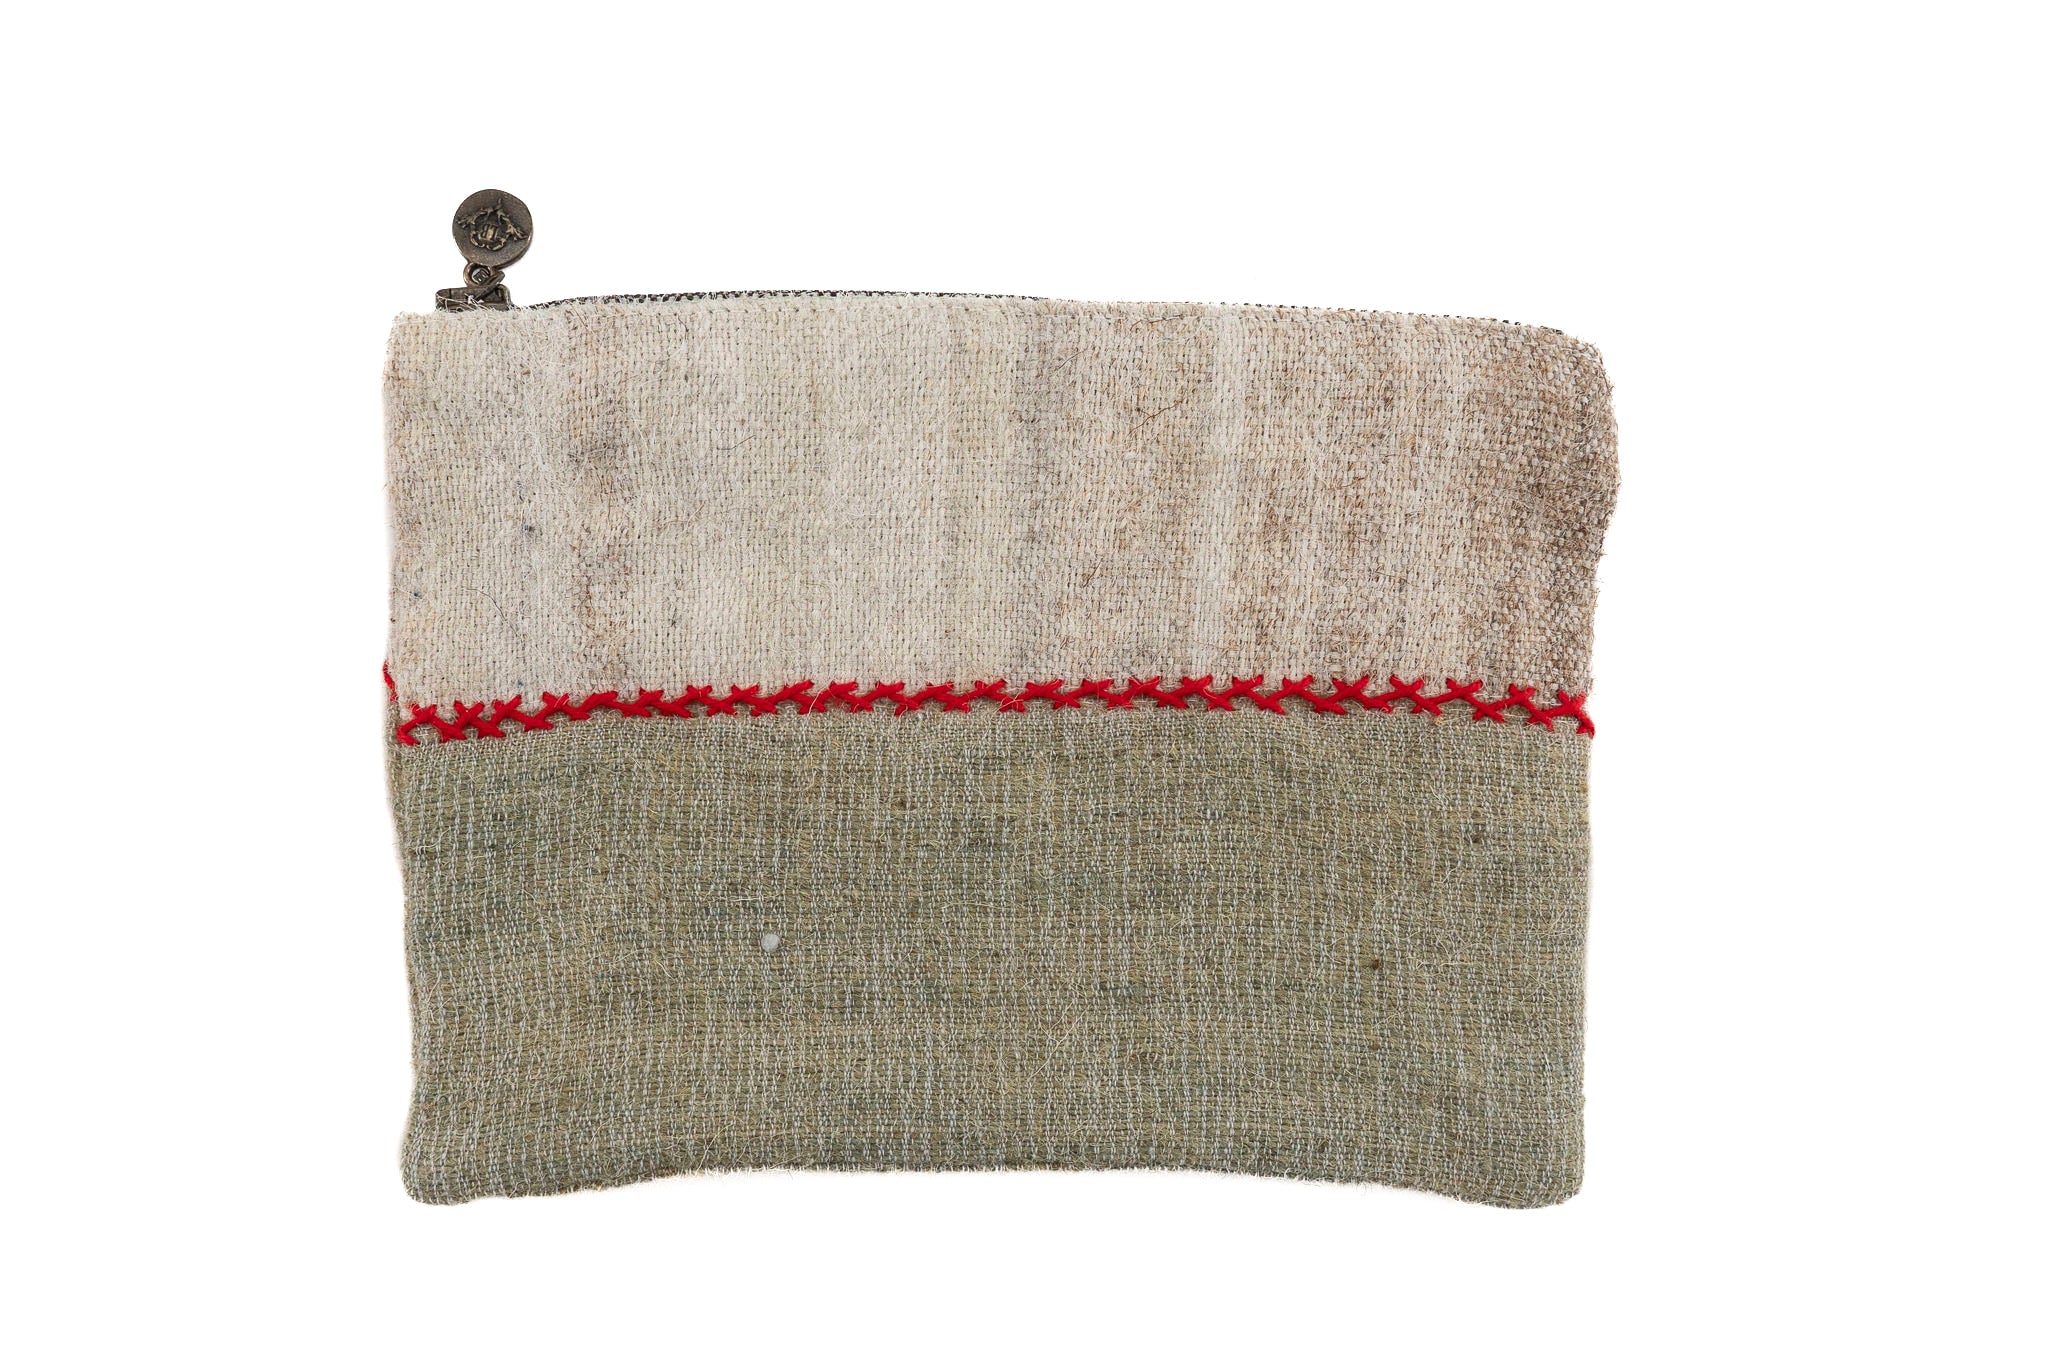 Bag: Handwoven wool, interior handwoven hemp lining - BG92